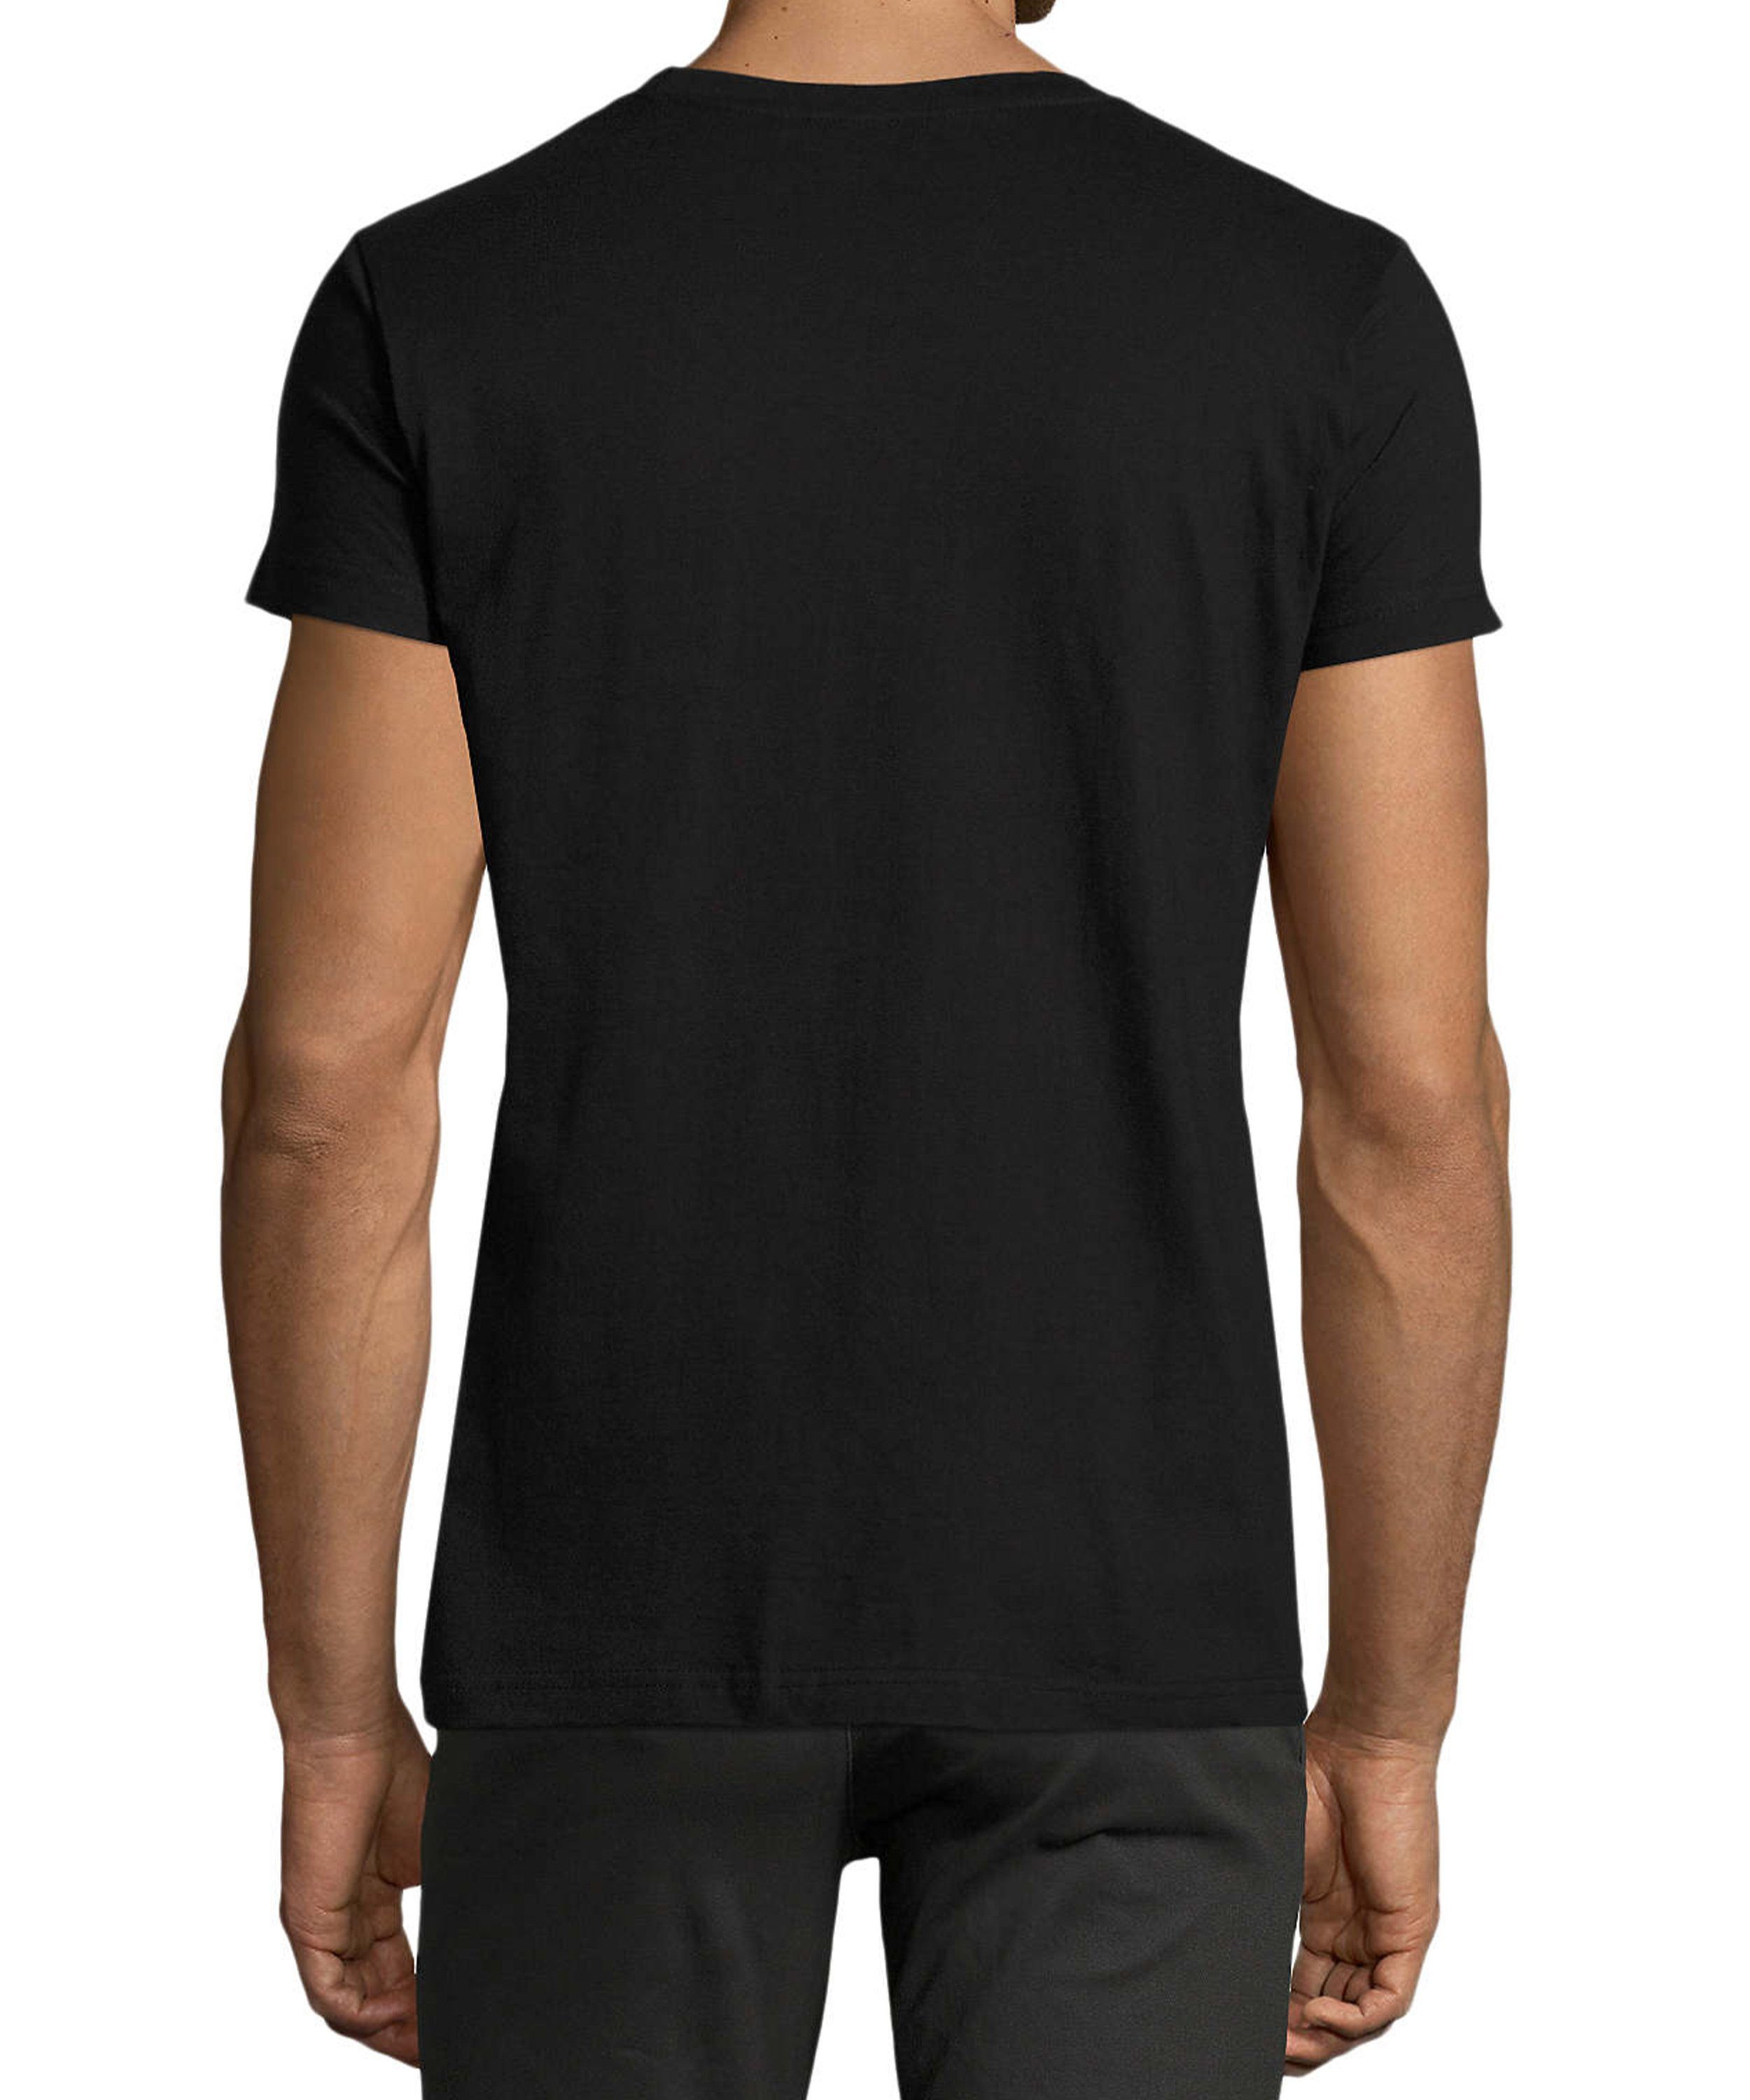 MyDesign24 T-Shirt Herren - Aufdruck Regular schwarz Fit, mit Oktoberfest Team Drinking Shirt Baumwollshirt i305 Print T-Shirt Fun